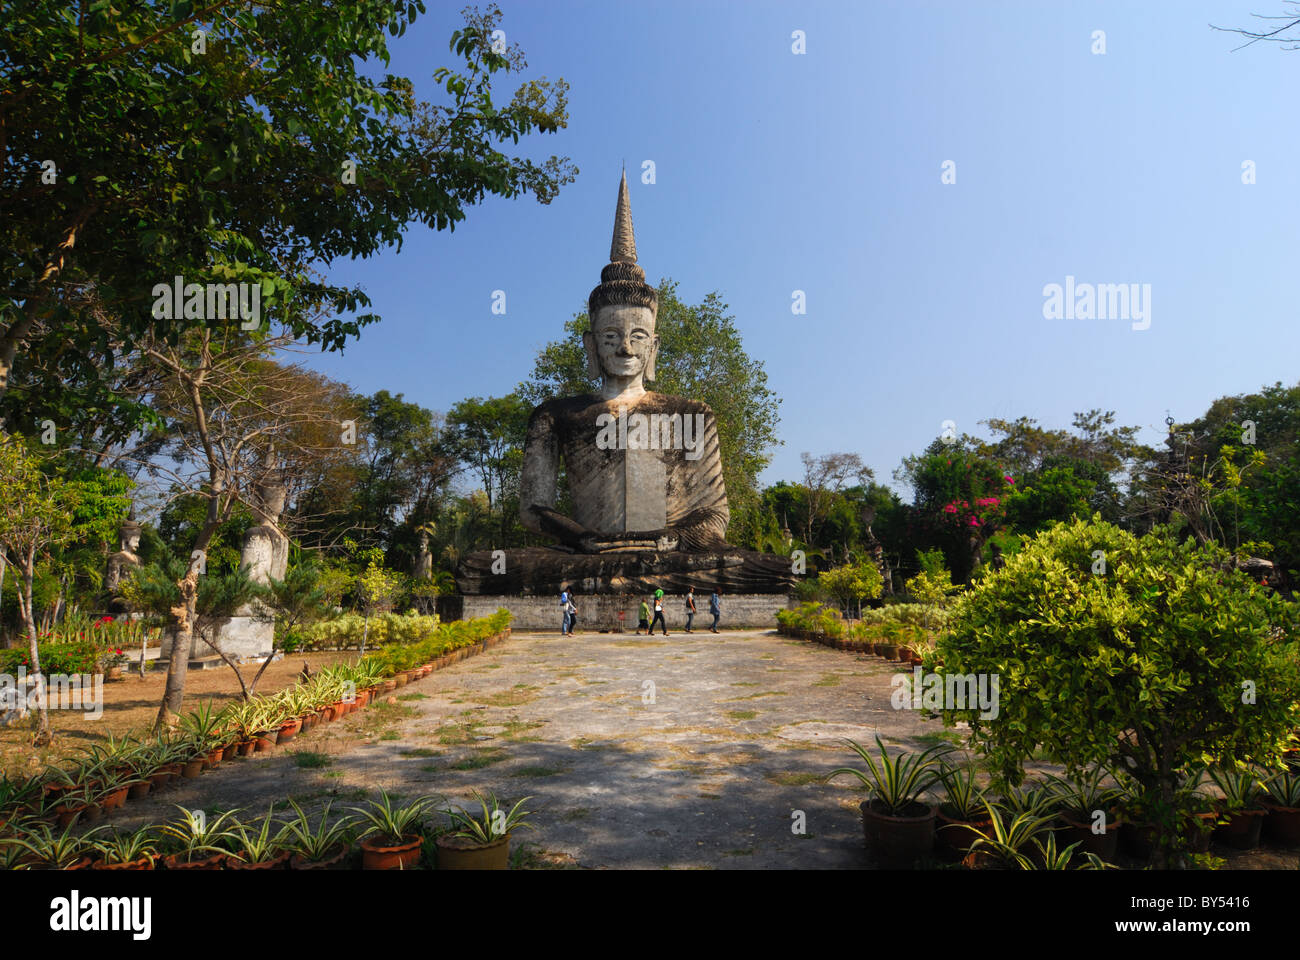 Buddha statue in the Sculpture park at Nong Khai, Thailand Stock Photo